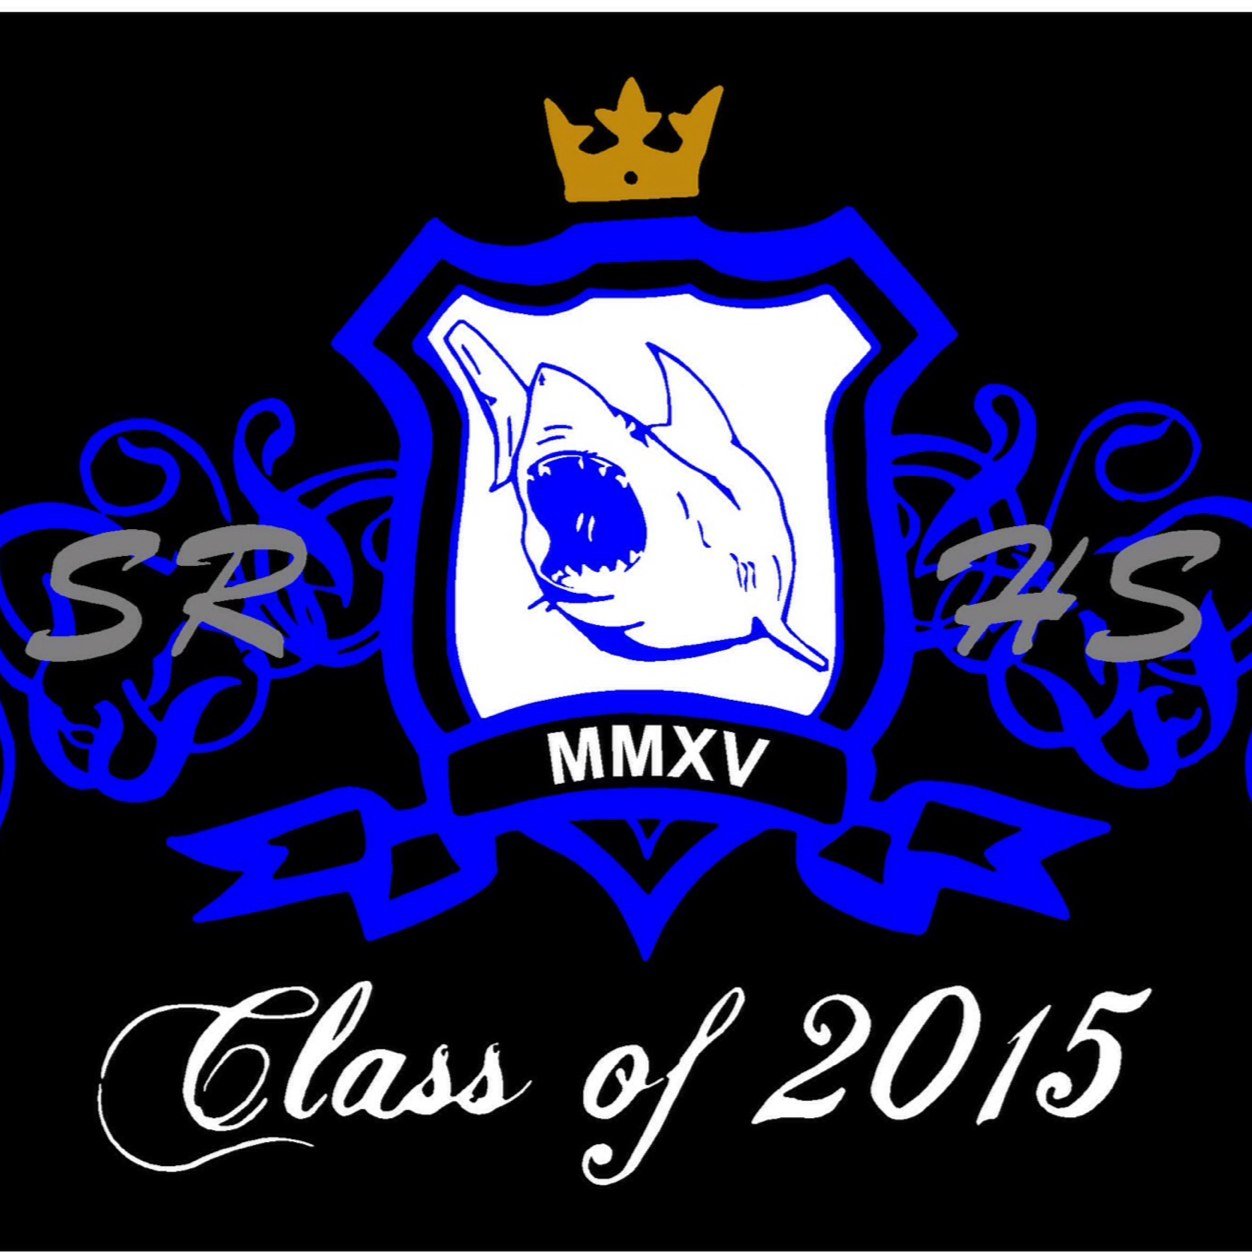 The offical Twitter page for the Class of 2015~ Senior Class President: Sammy, VP: Josh, Treasurer: Kyra, Secratary: Jordan~